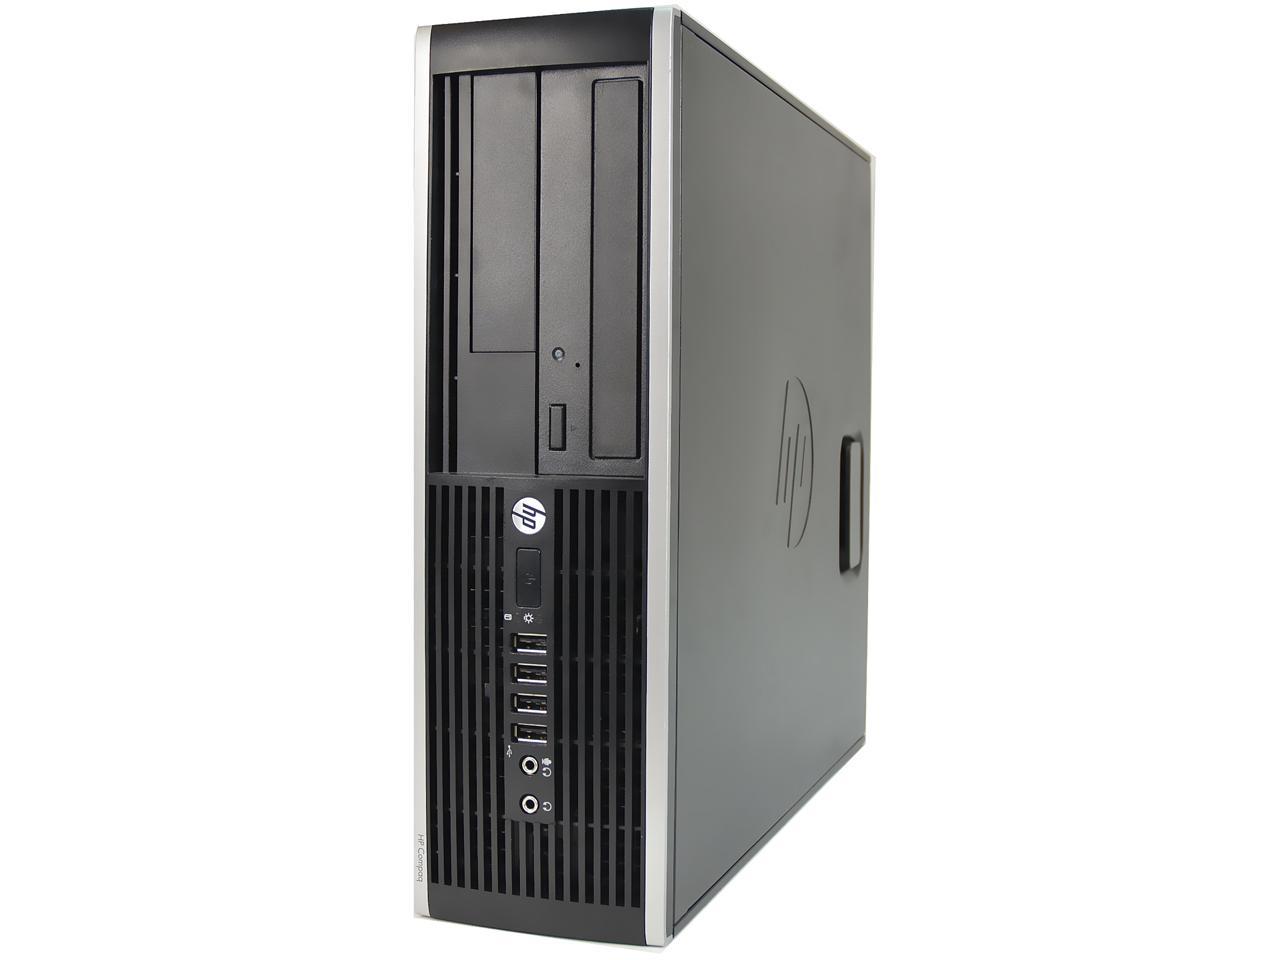 HP Desktop Computer 6300 Intel Core i5 3rd Gen 3450 (3.10 GHz) 4 GB 250 GB HDD Windows 10 Home 64-Bit